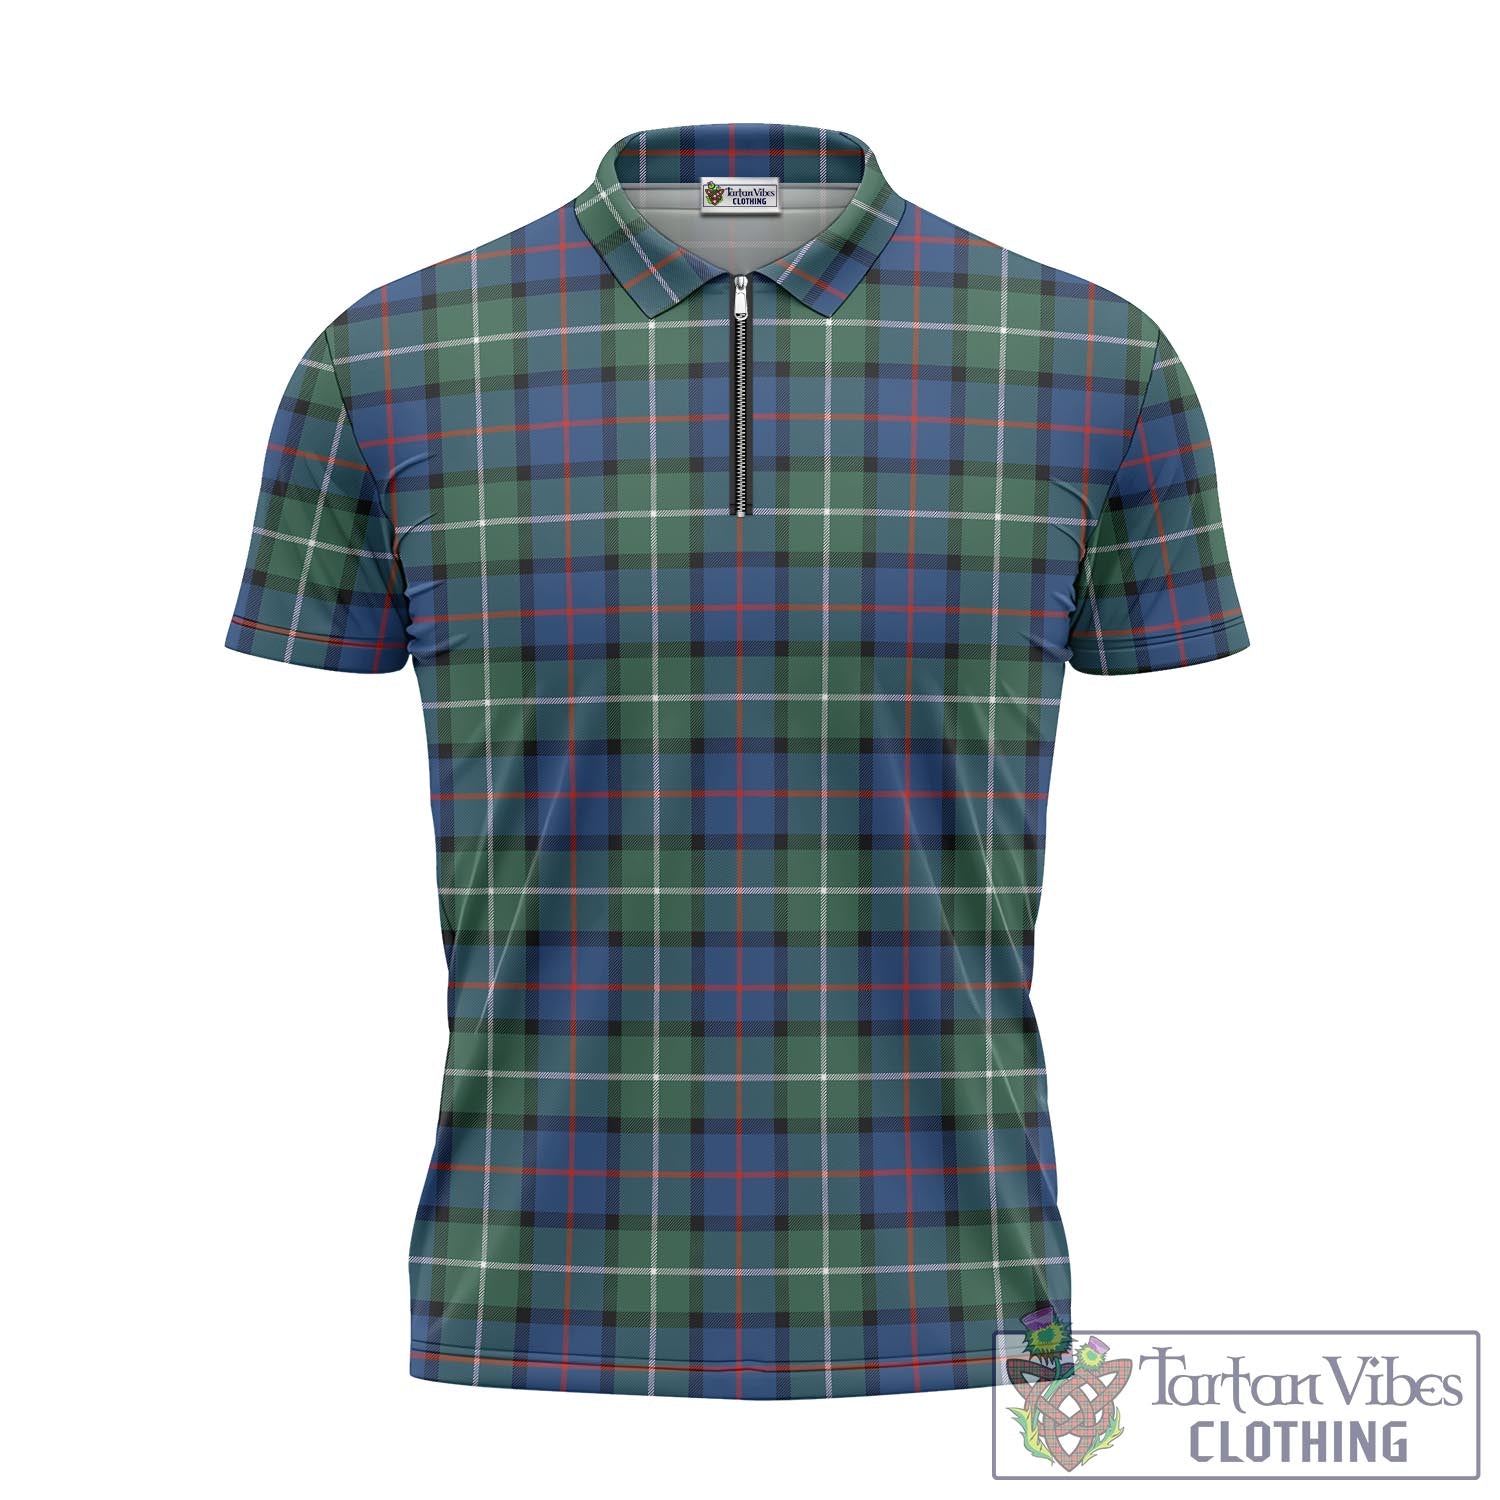 Tartan Vibes Clothing Davidson of Tulloch Tartan Zipper Polo Shirt